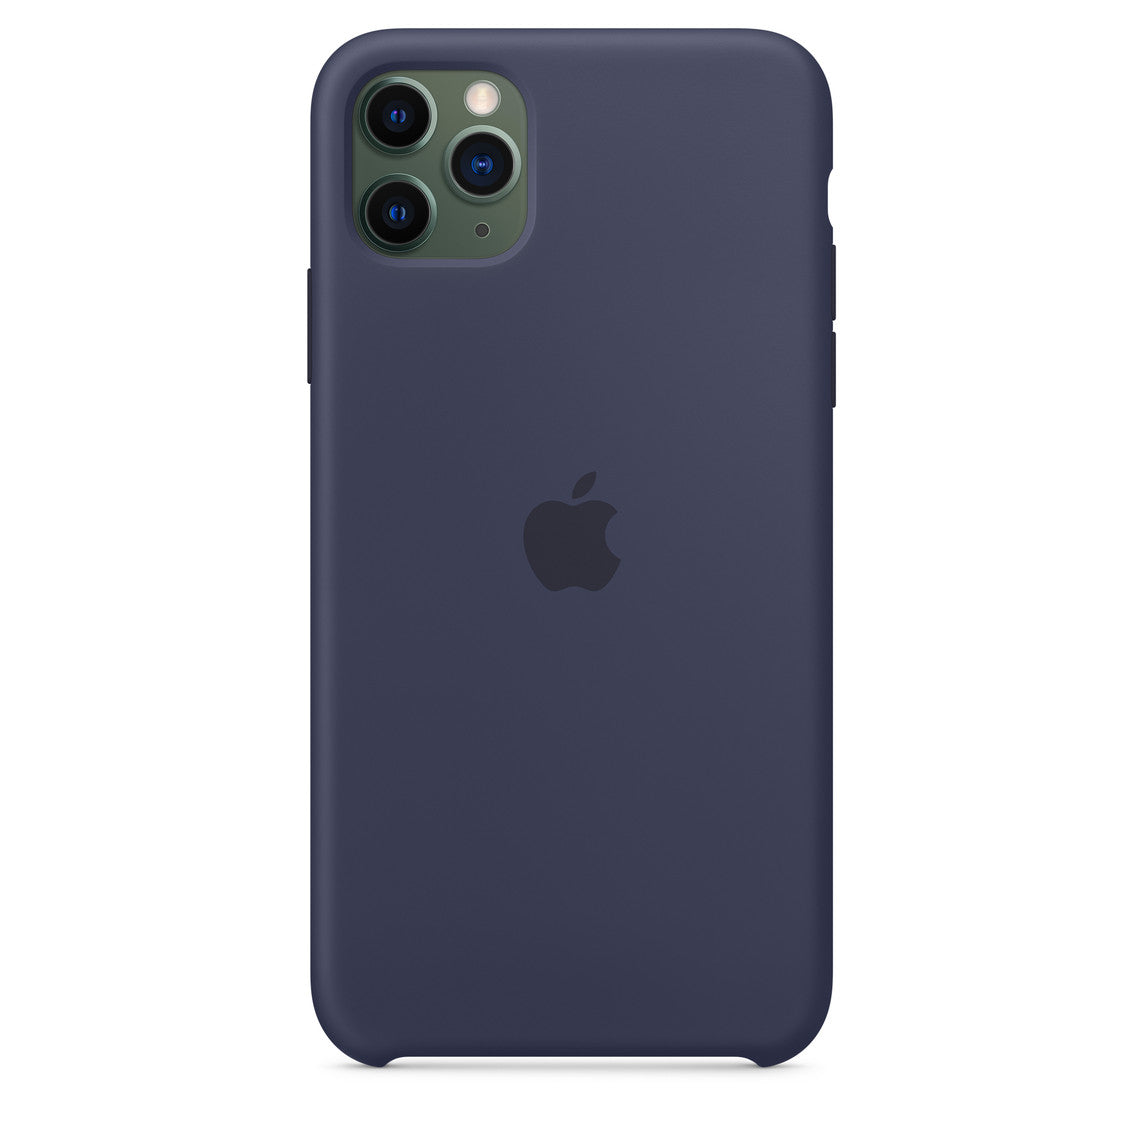 Apple iPhone 11 Pro Max 64GB Nachtgrün Fair Ohne Vertrag mit Apple iPhone 11 Pro Max Silikonhülle – Mitternachtsblau